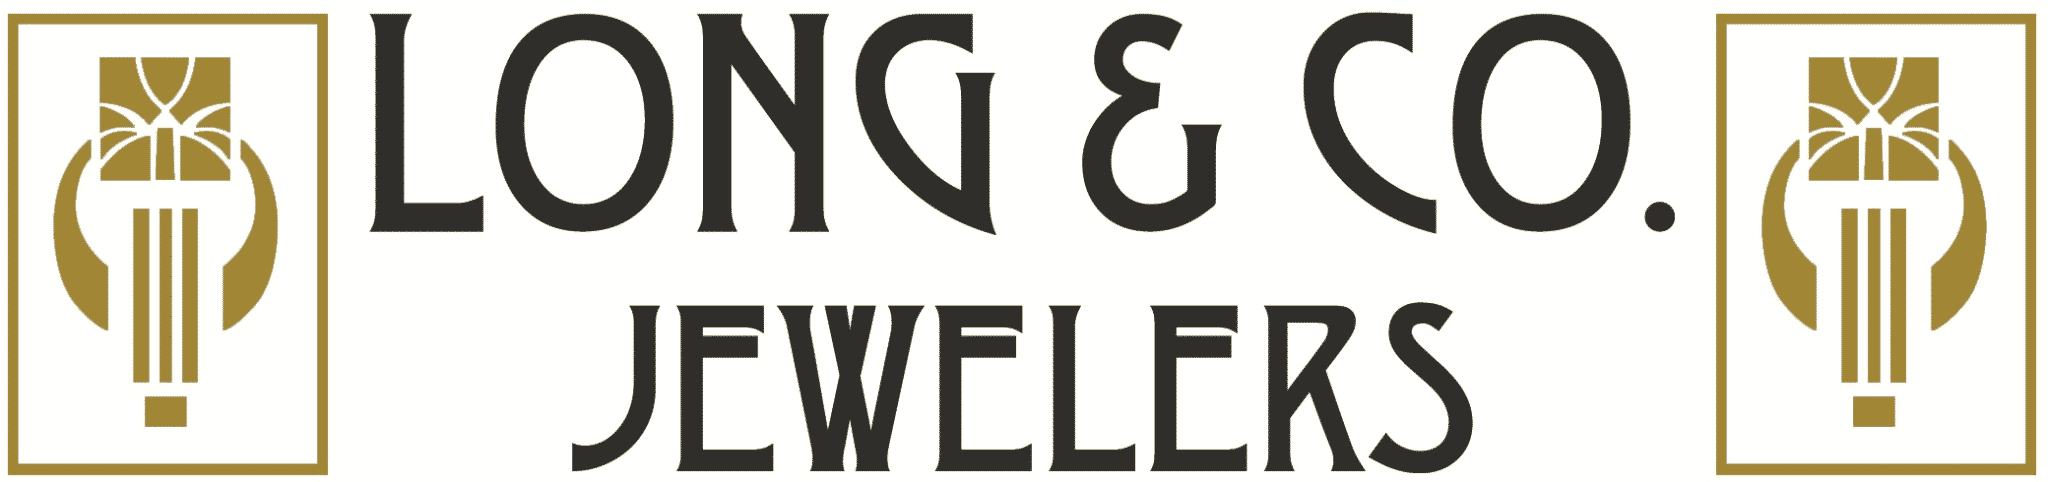 Long Jewelers logo